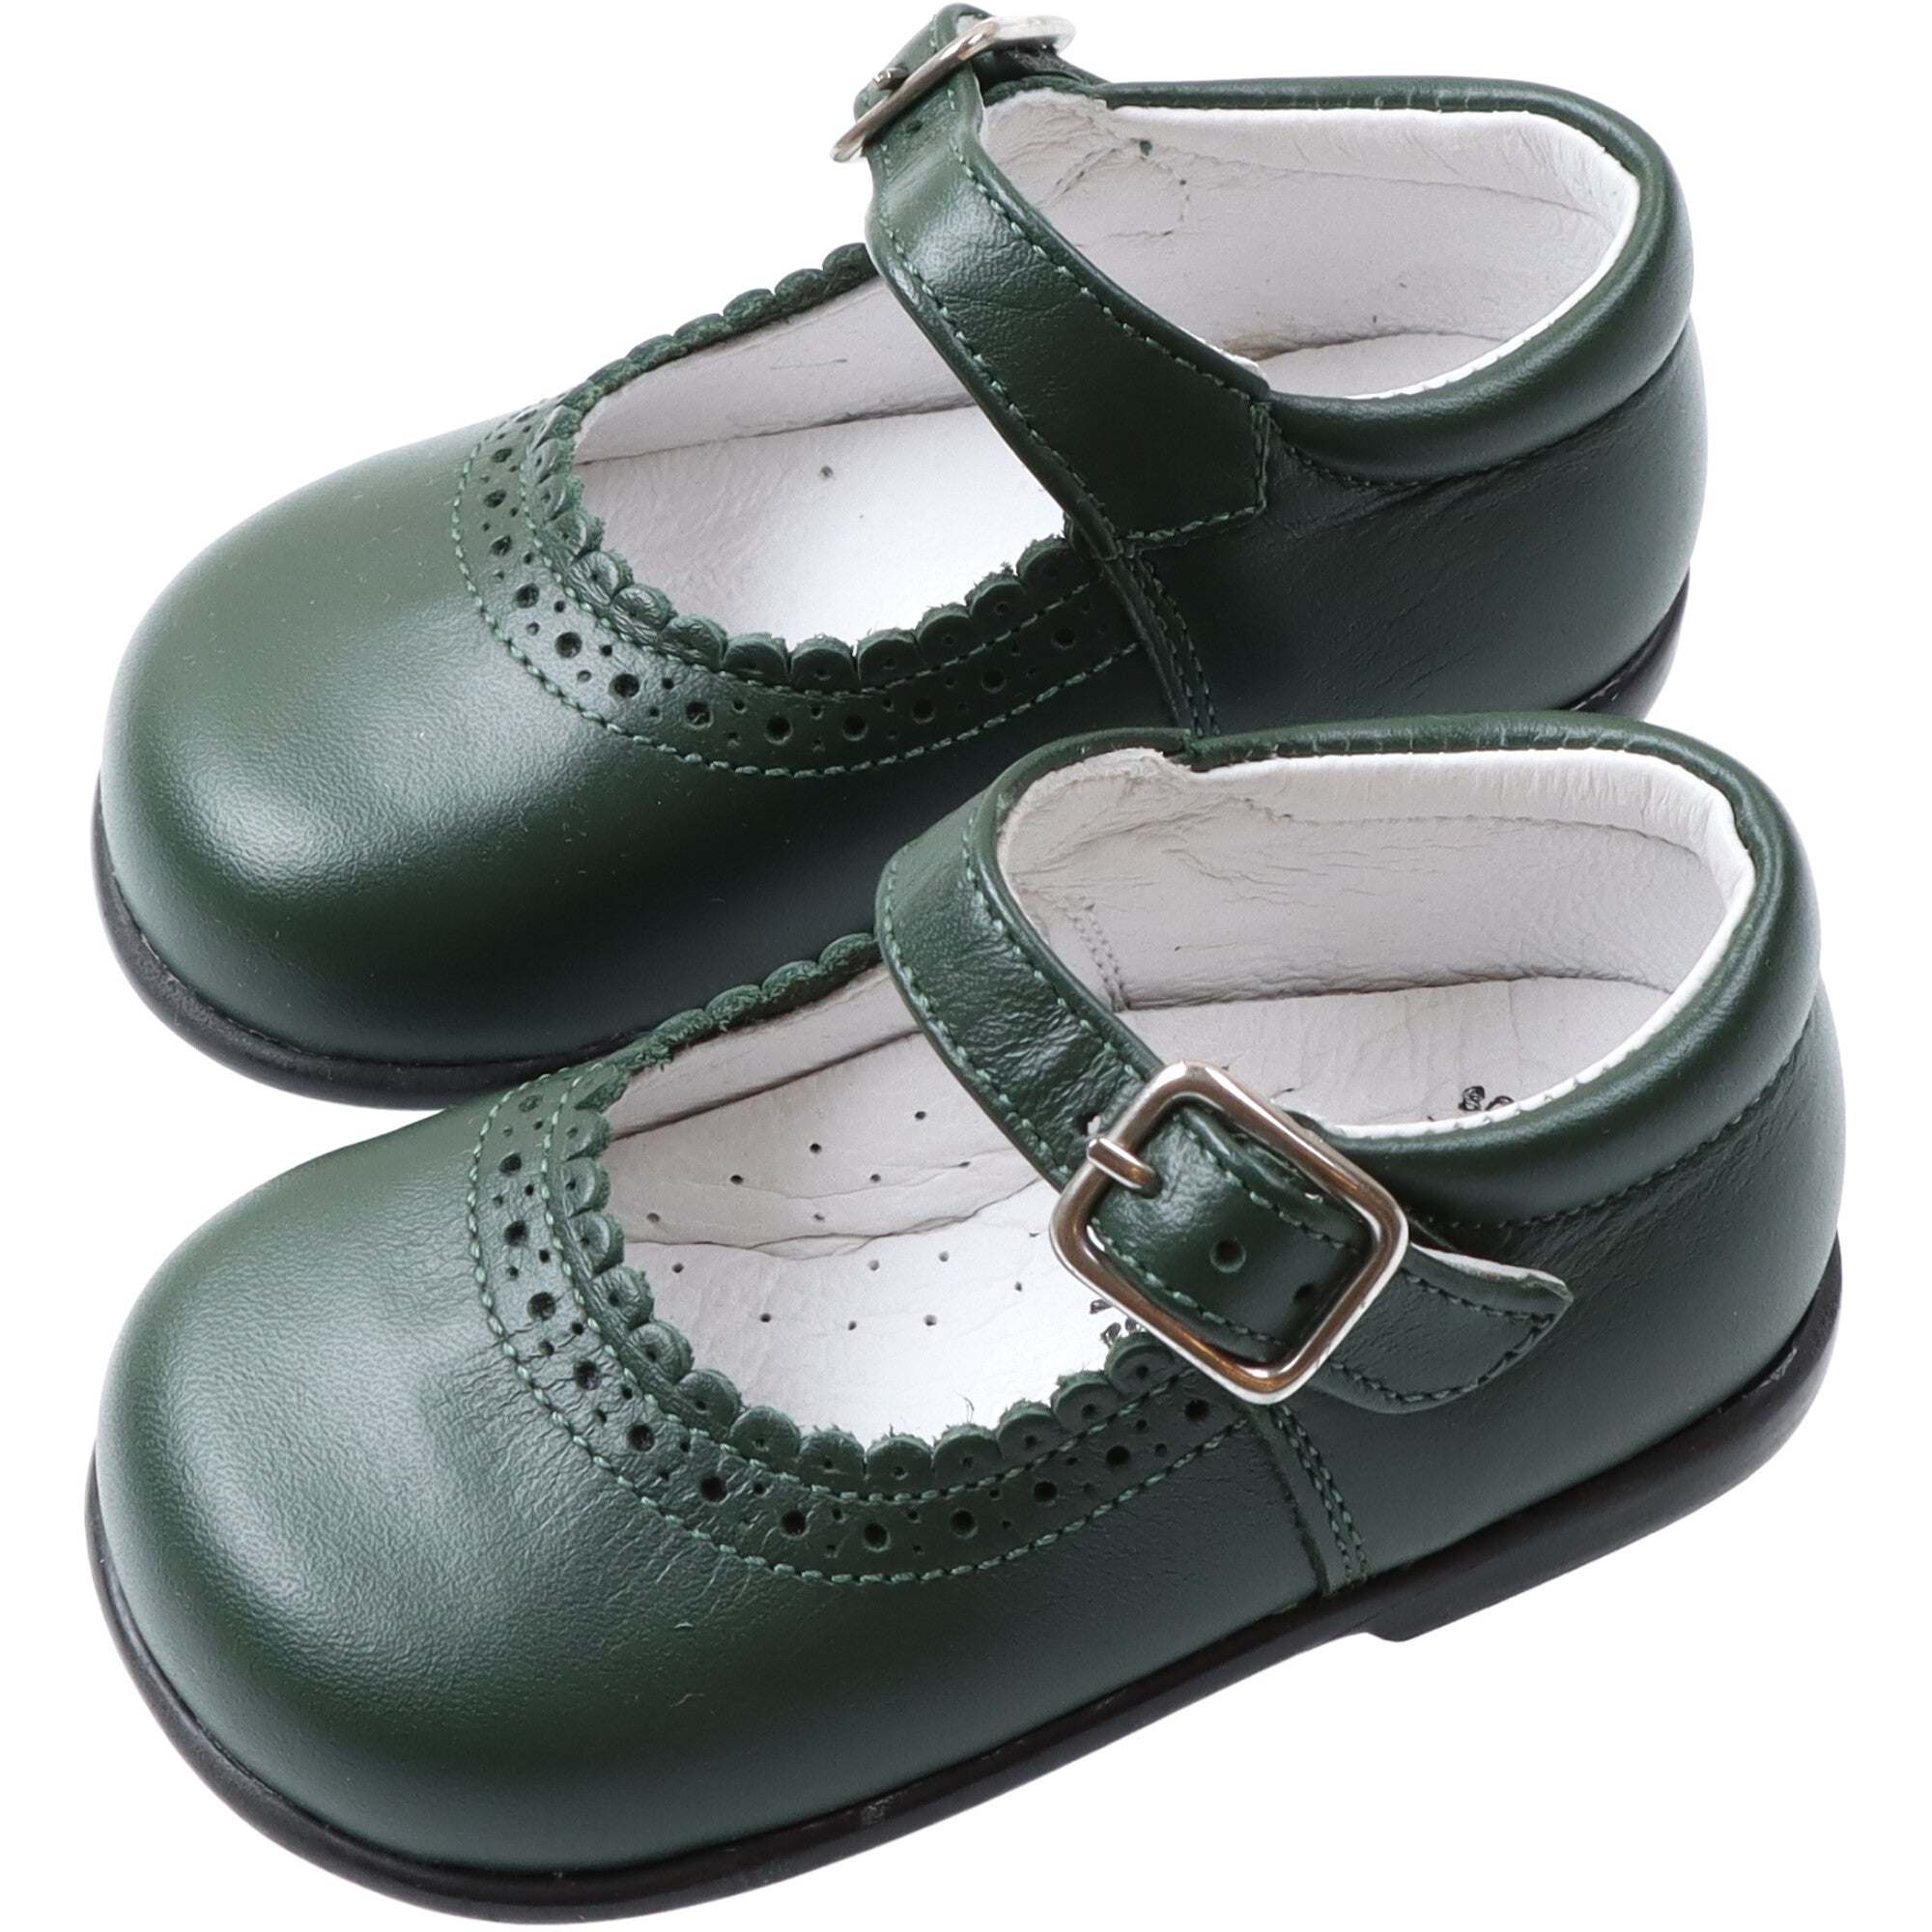 scarpa-bambina-modello-ballerina-in-pelle-colore-verde